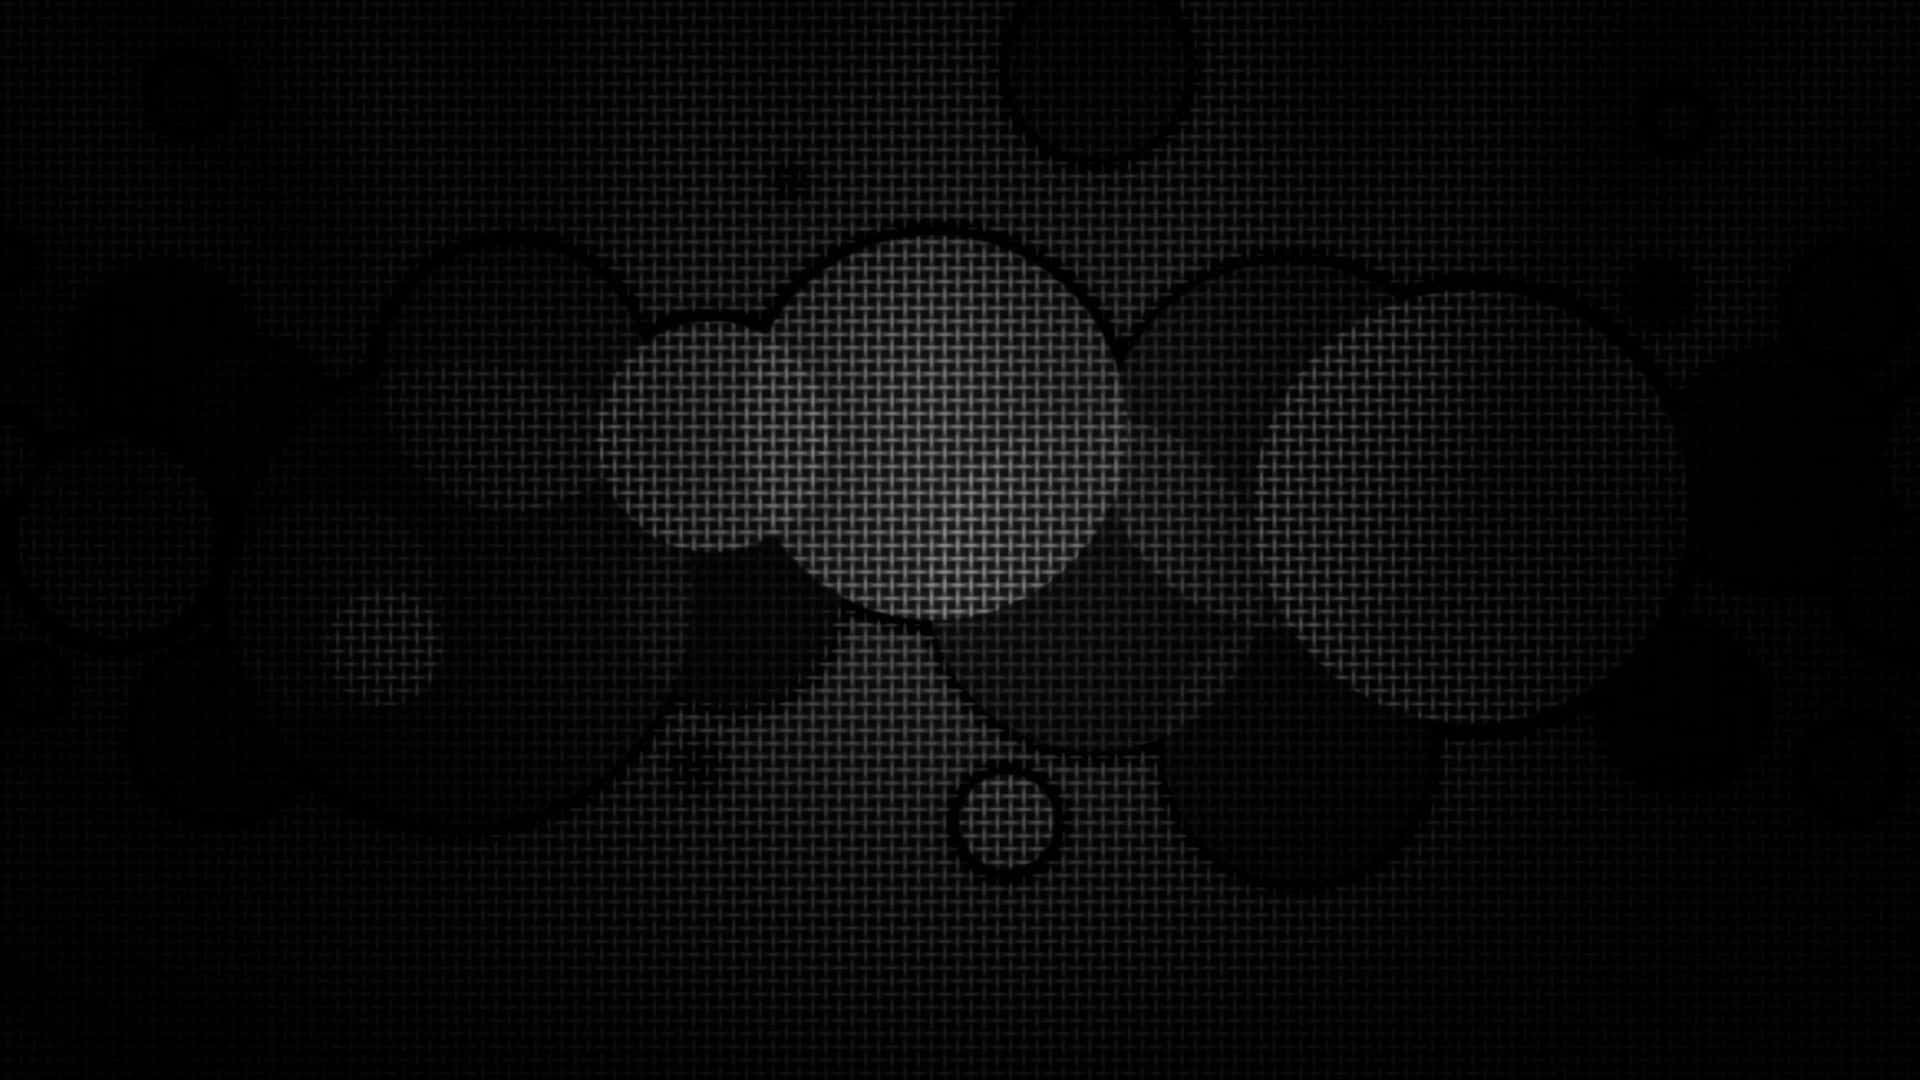 Abstract black desktop background